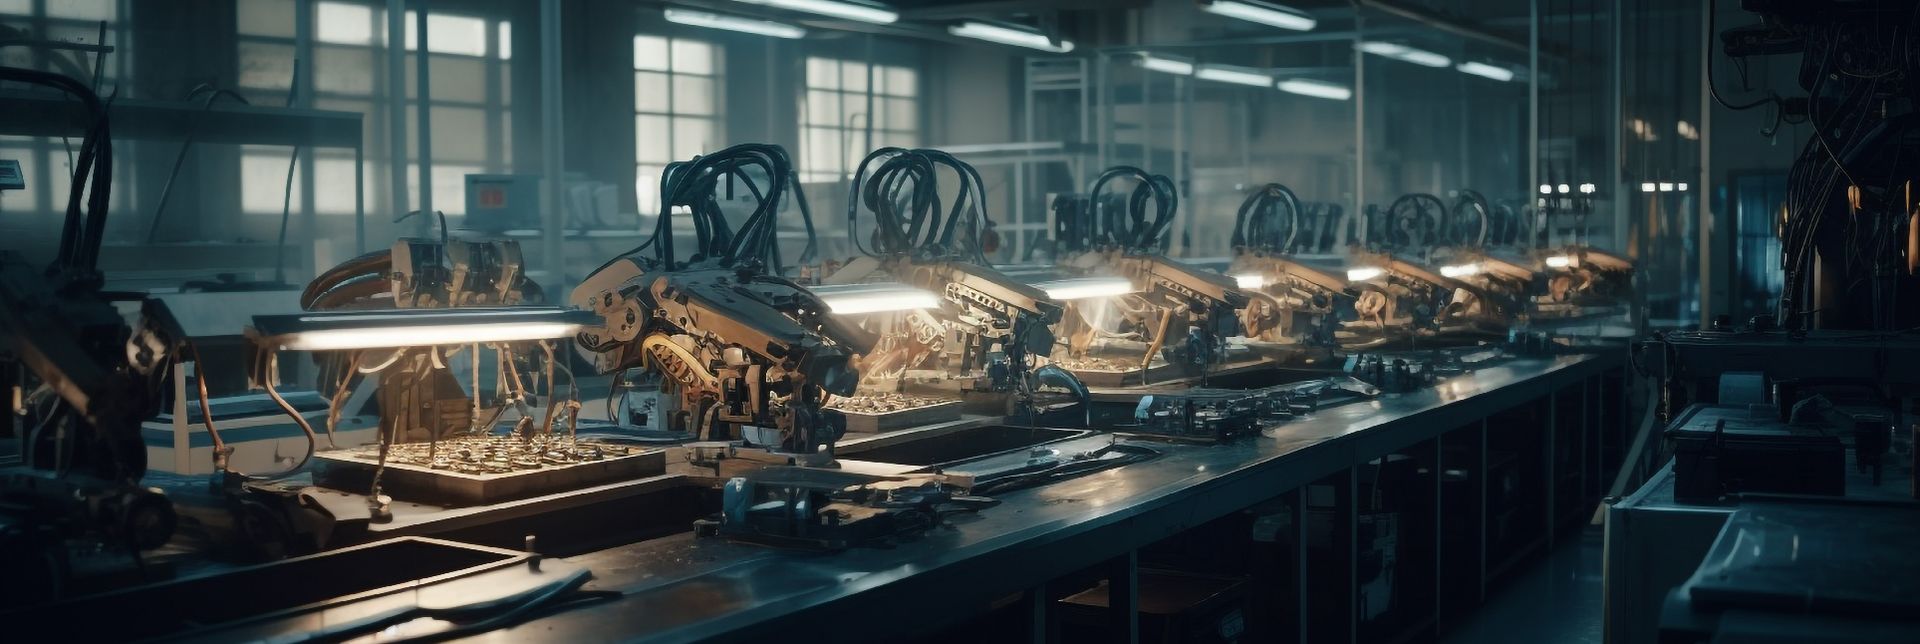 alt="collaborative robots in factory"